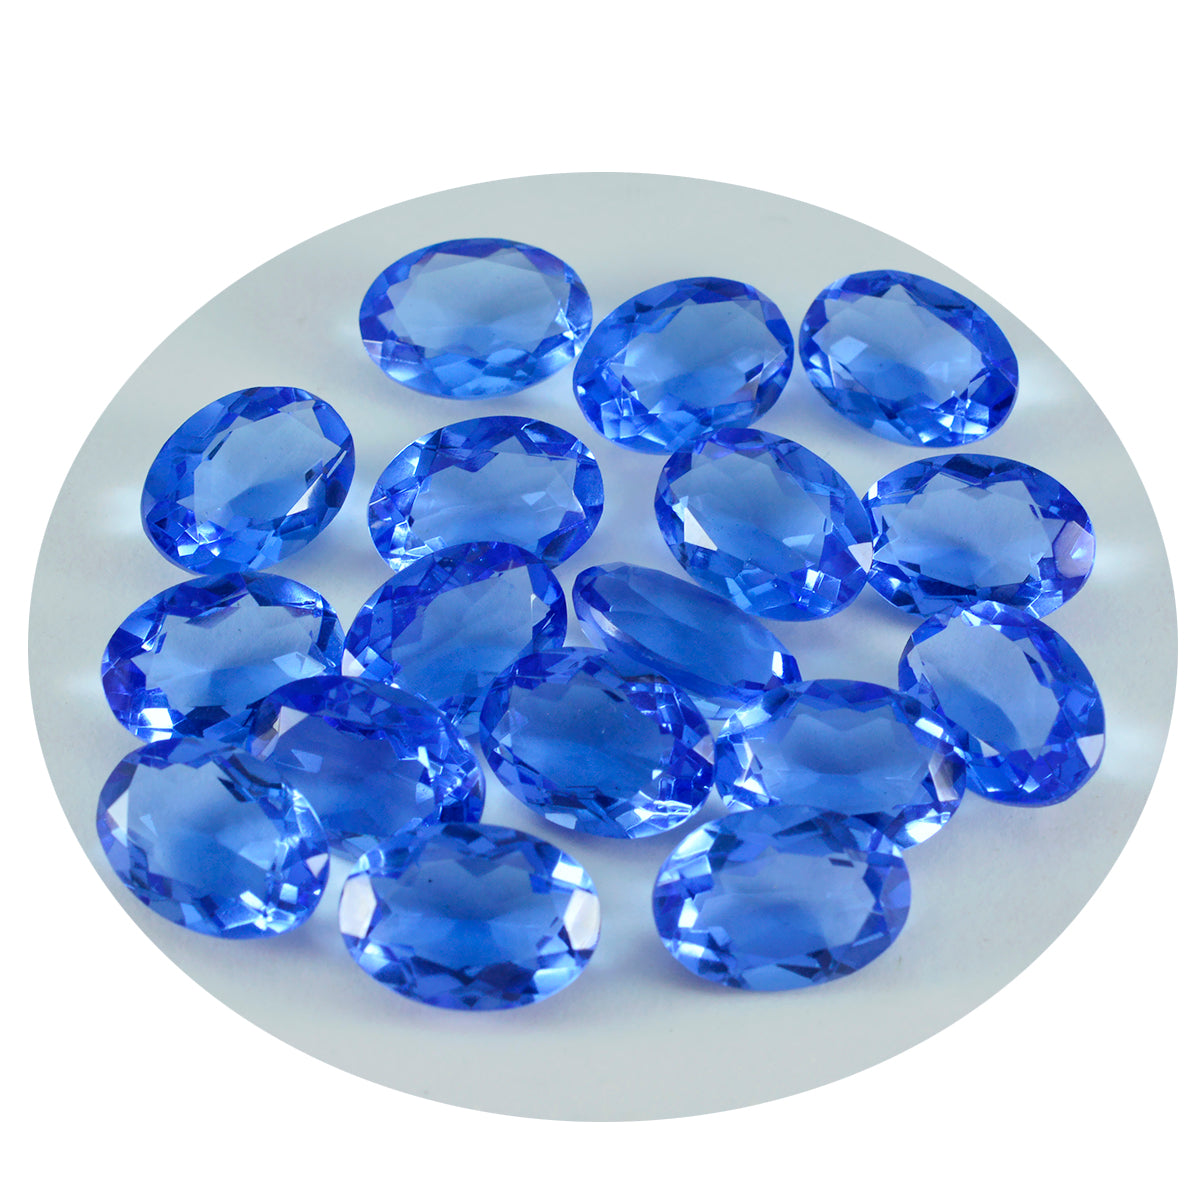 Riyogems 1 Stück blauer Saphir, CZ, facettiert, 7 x 9 mm, ovale Form, A1-Qualitätsedelsteine